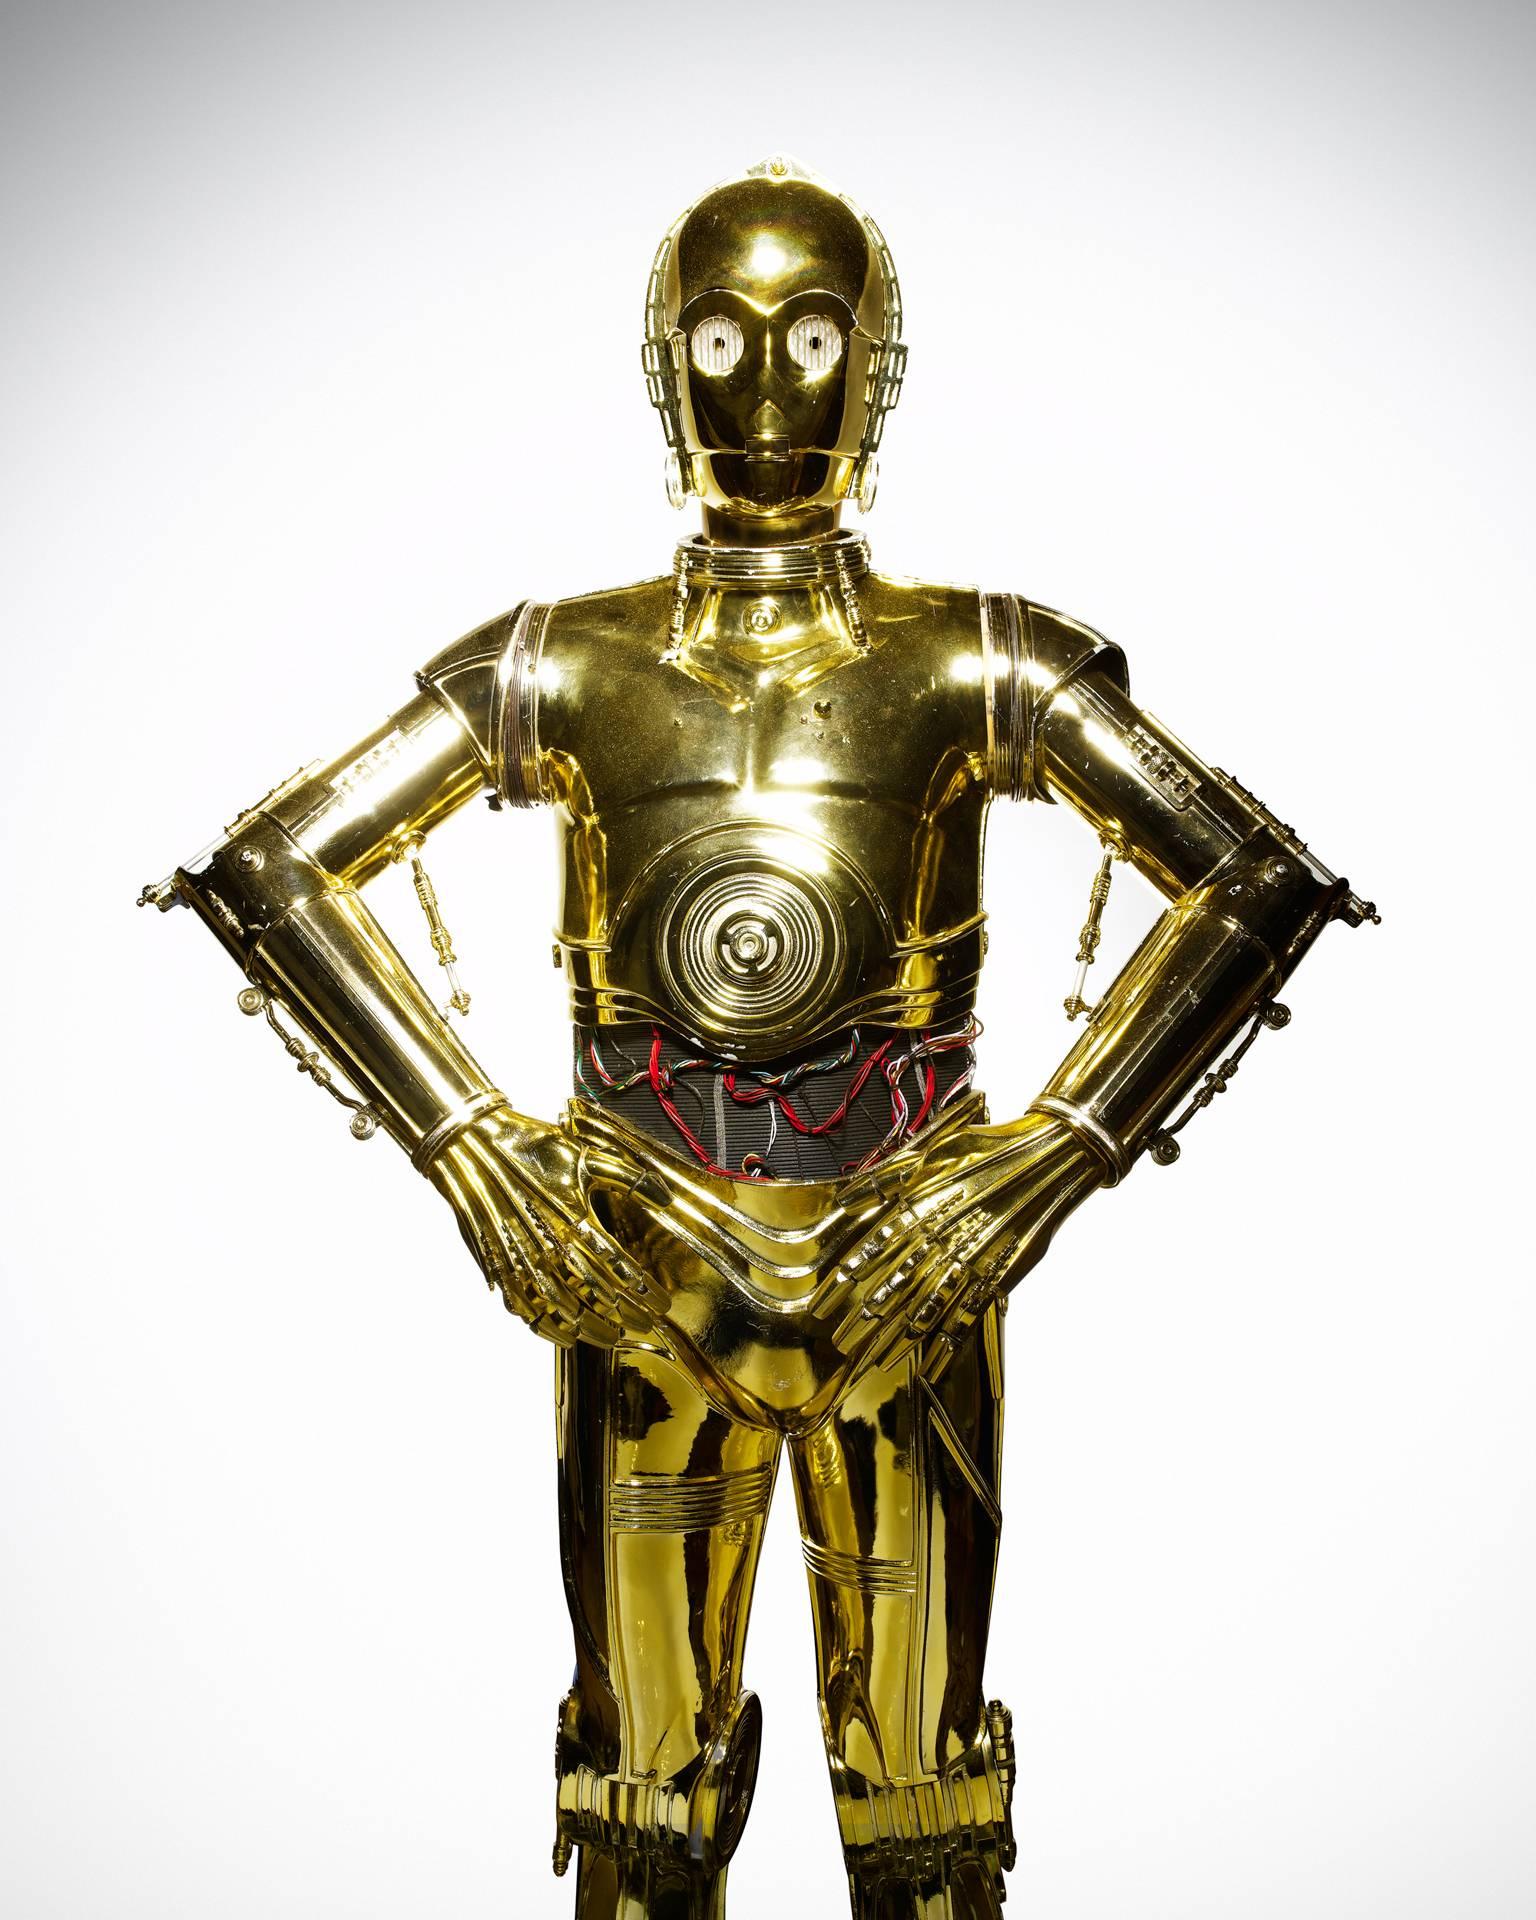 Star Wars ( C-3PO ) 64 x 48"